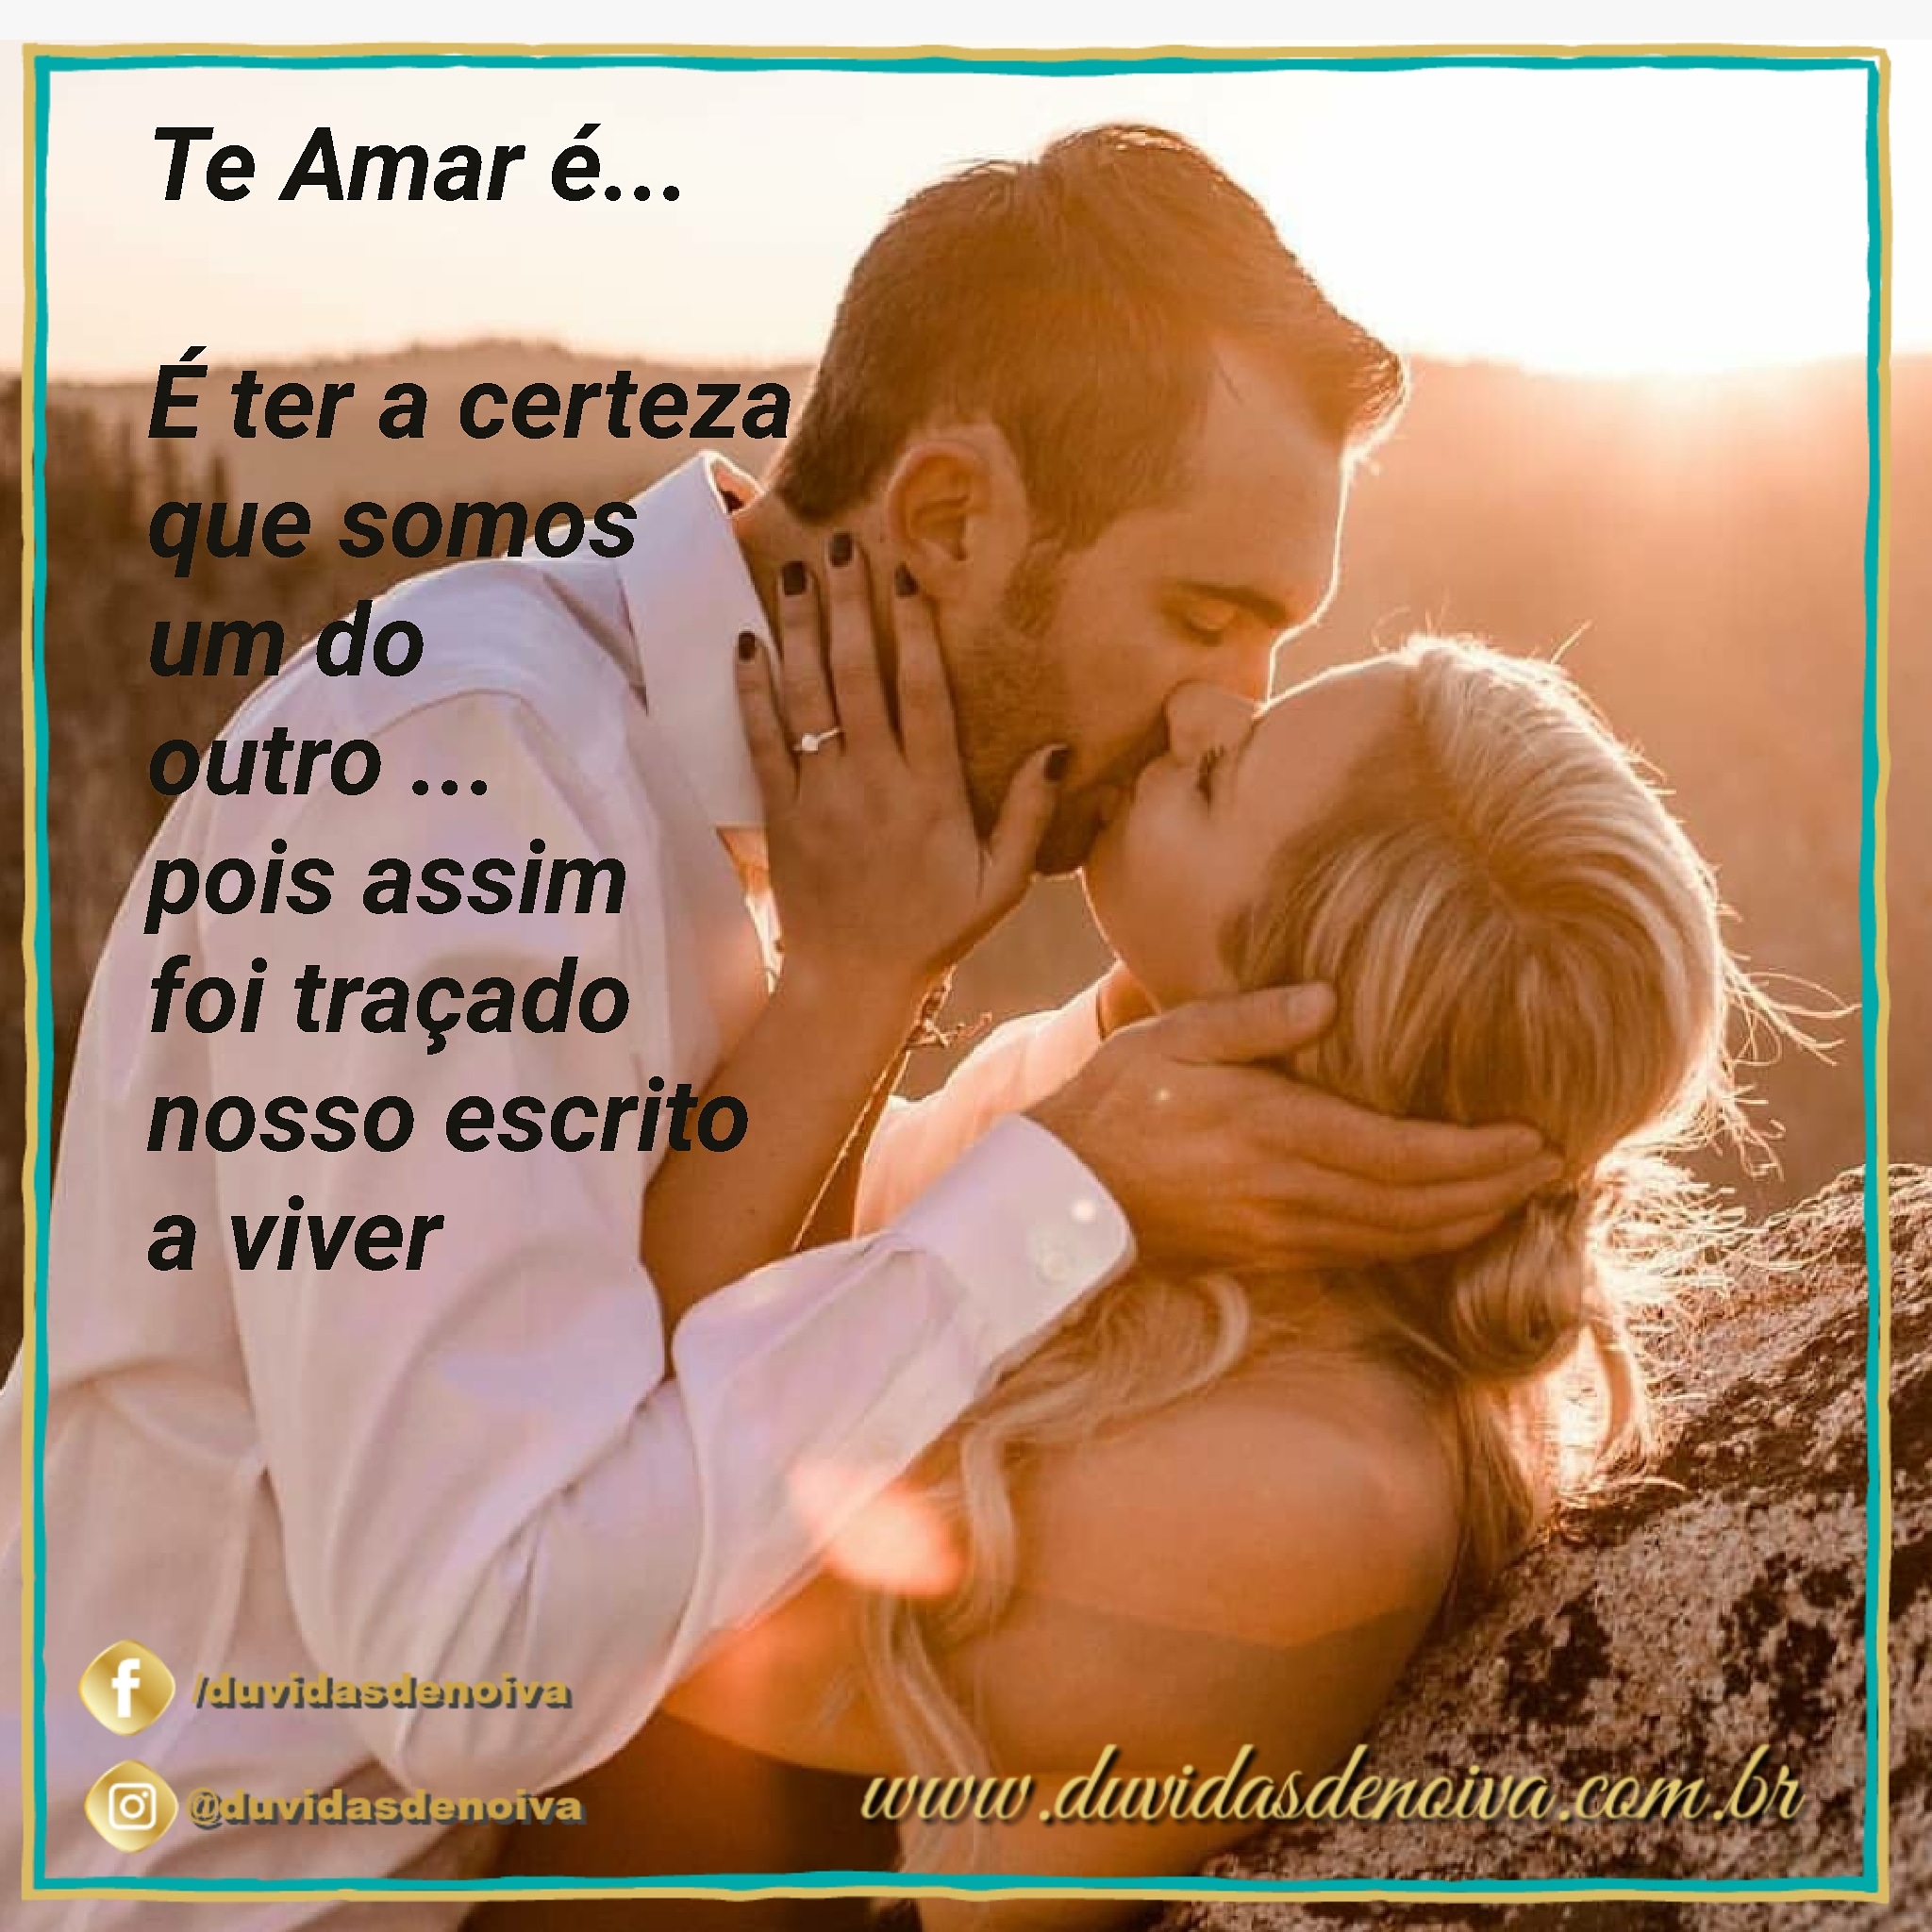 IMG 20190114 190439 421 1 - Te Amar é...posts de Amor